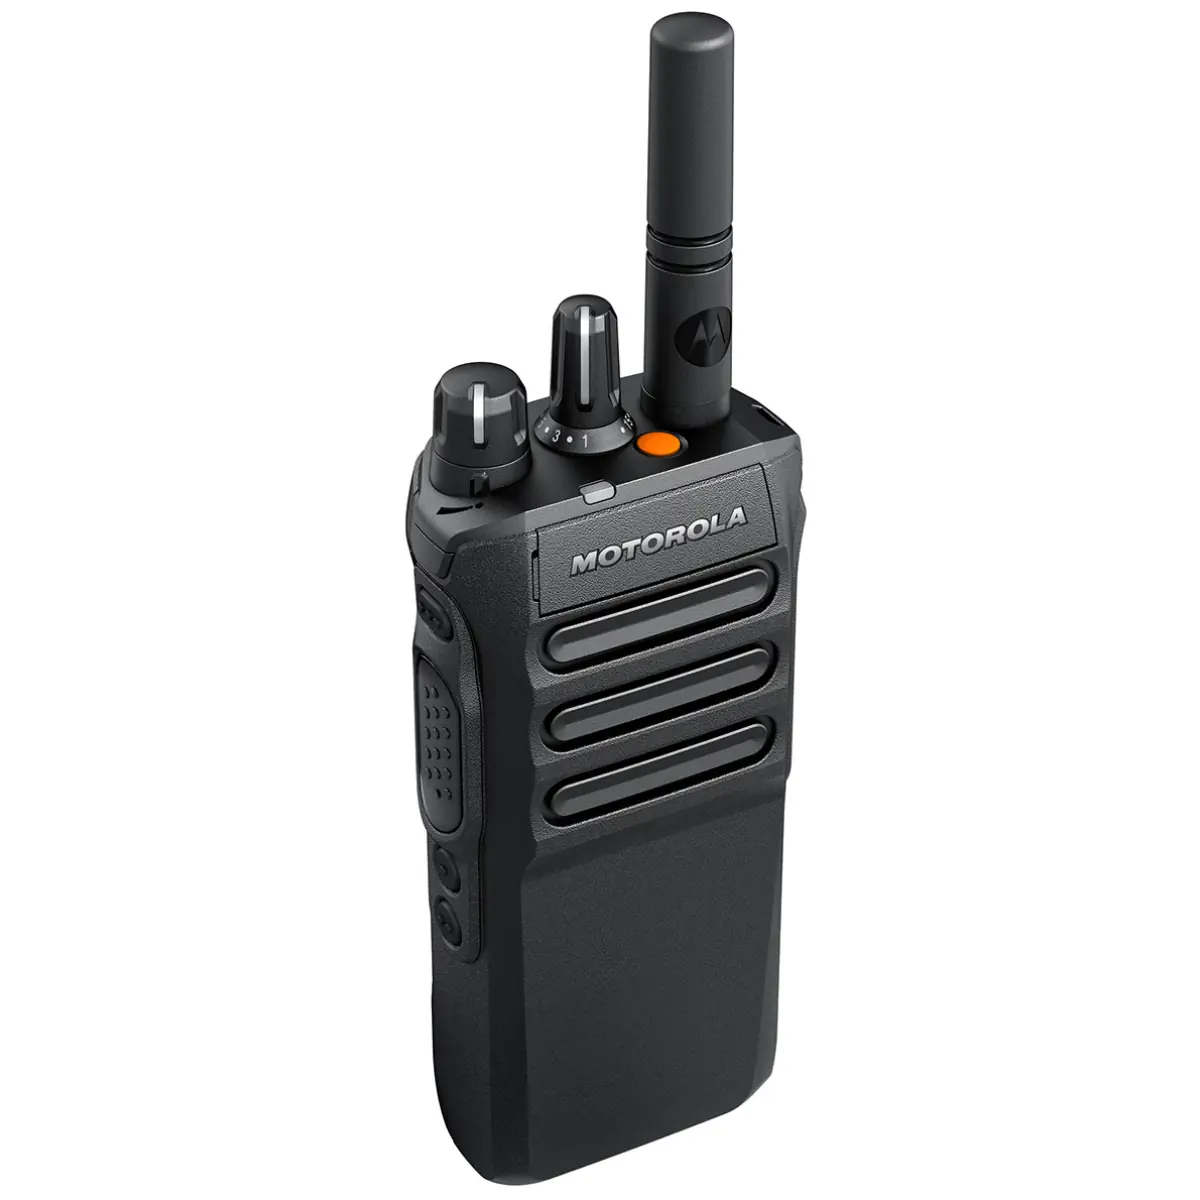 Motorola MOTOTRBO R7 CAPABLE - portofoon vergunningsplichtig digitaal, frequenties UHF - BIW GPS